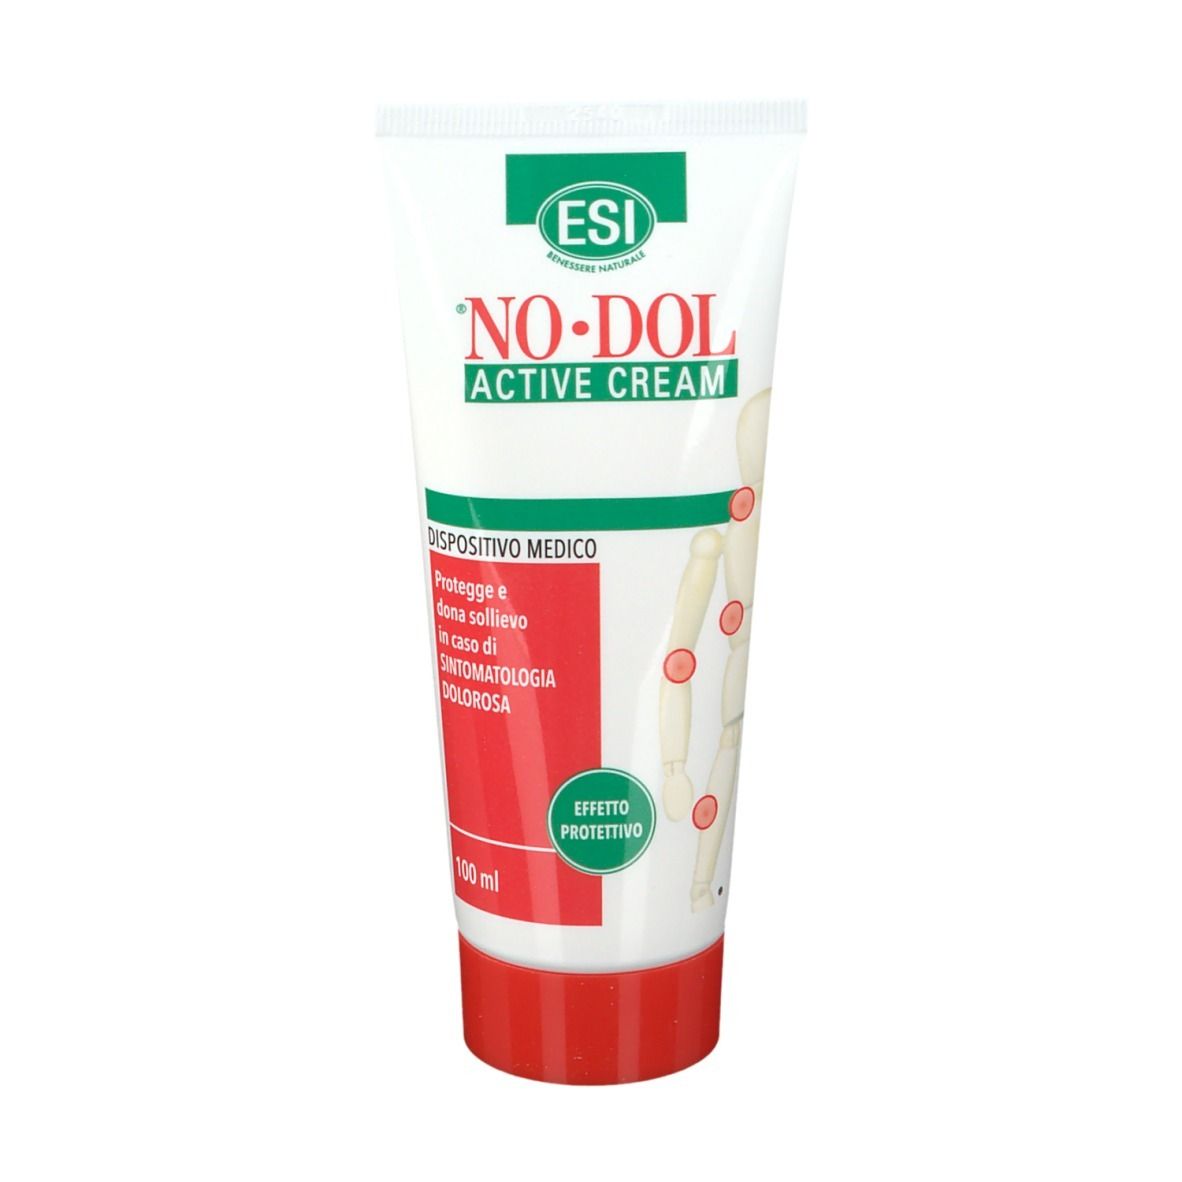 Image of ESI NO DOL Active Cream